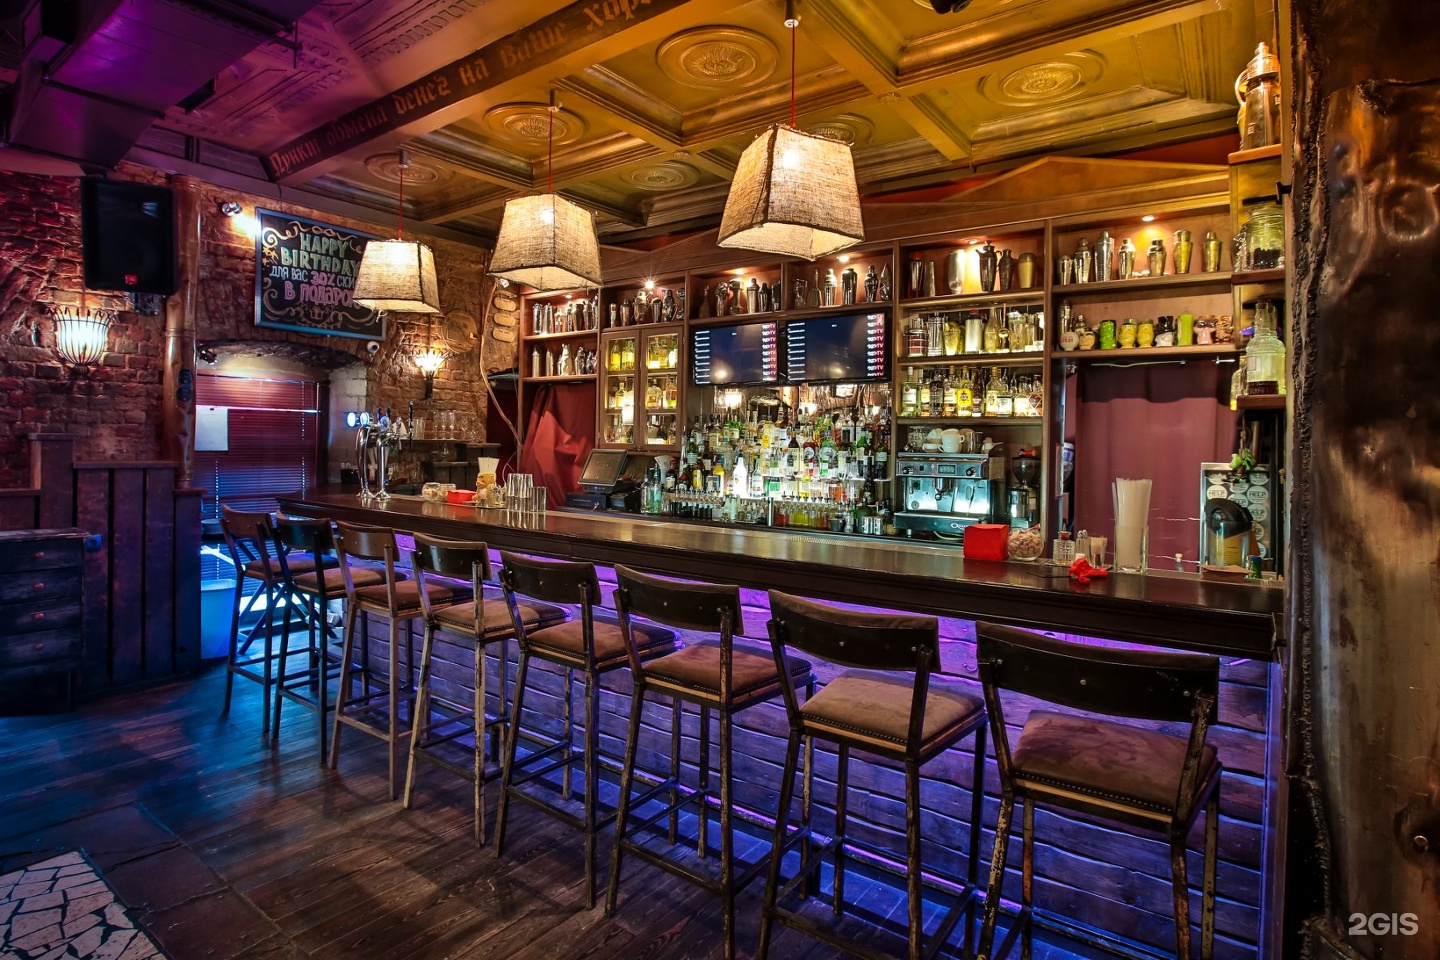 The bar москва